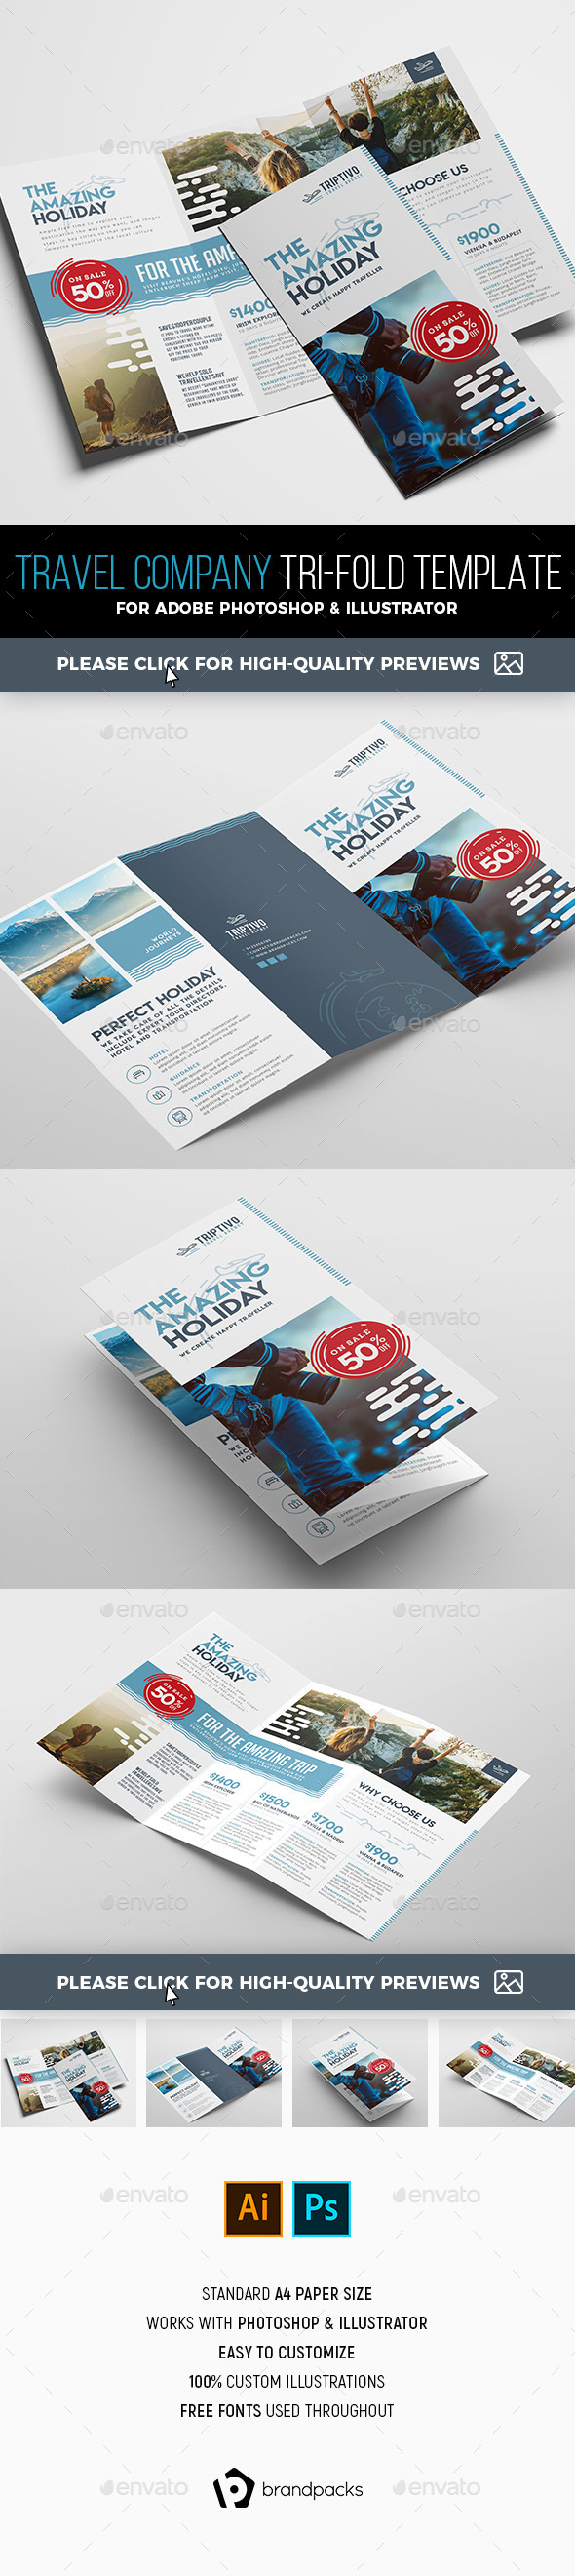 Travel Company Tri-Fold Brochure Template